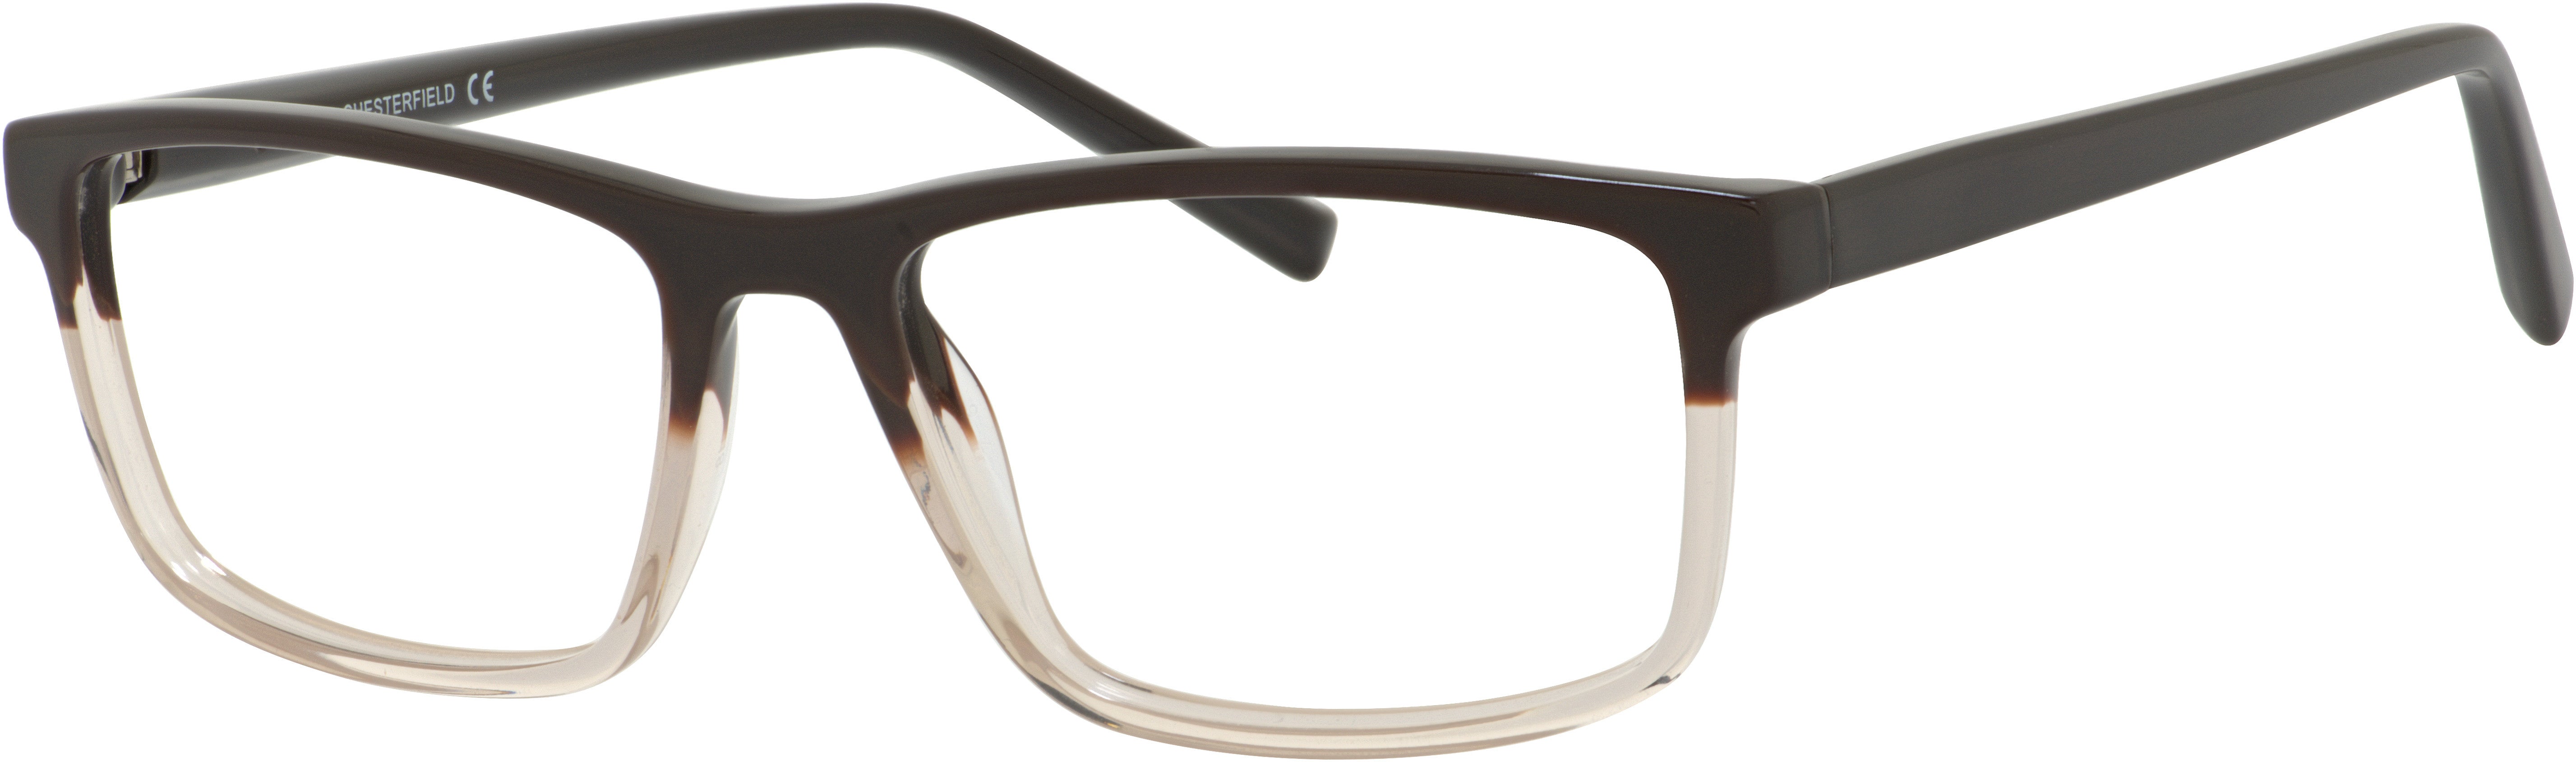  Chesterfield 58XL Rectangular Eyeglasses 0YL3-0YL3  Brown Crystal (00 Demo Lens)